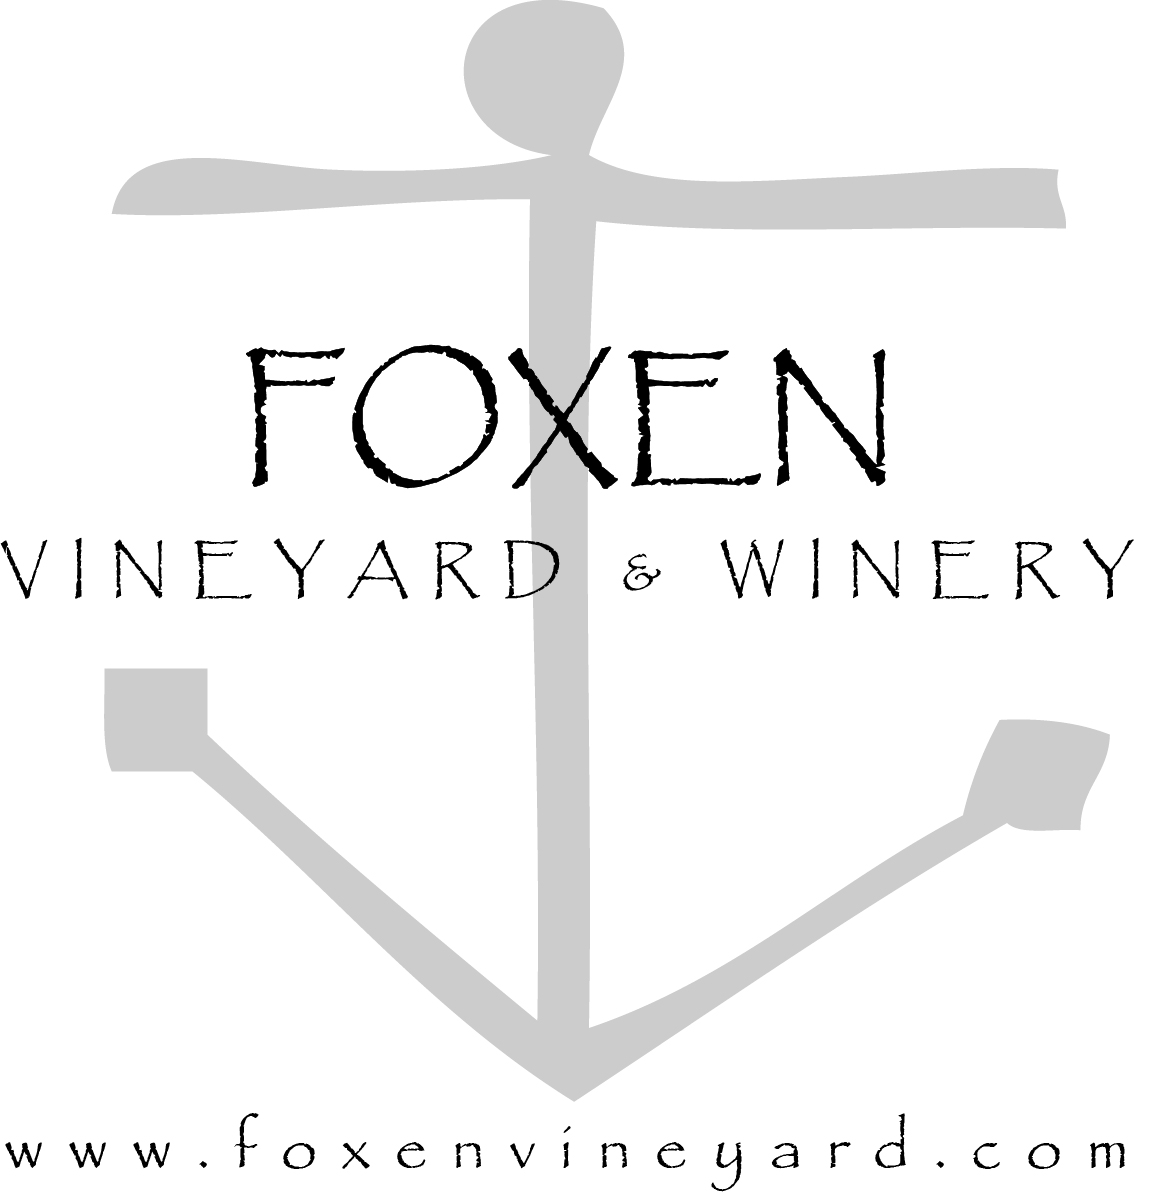 Foxen Vineyard & Winery